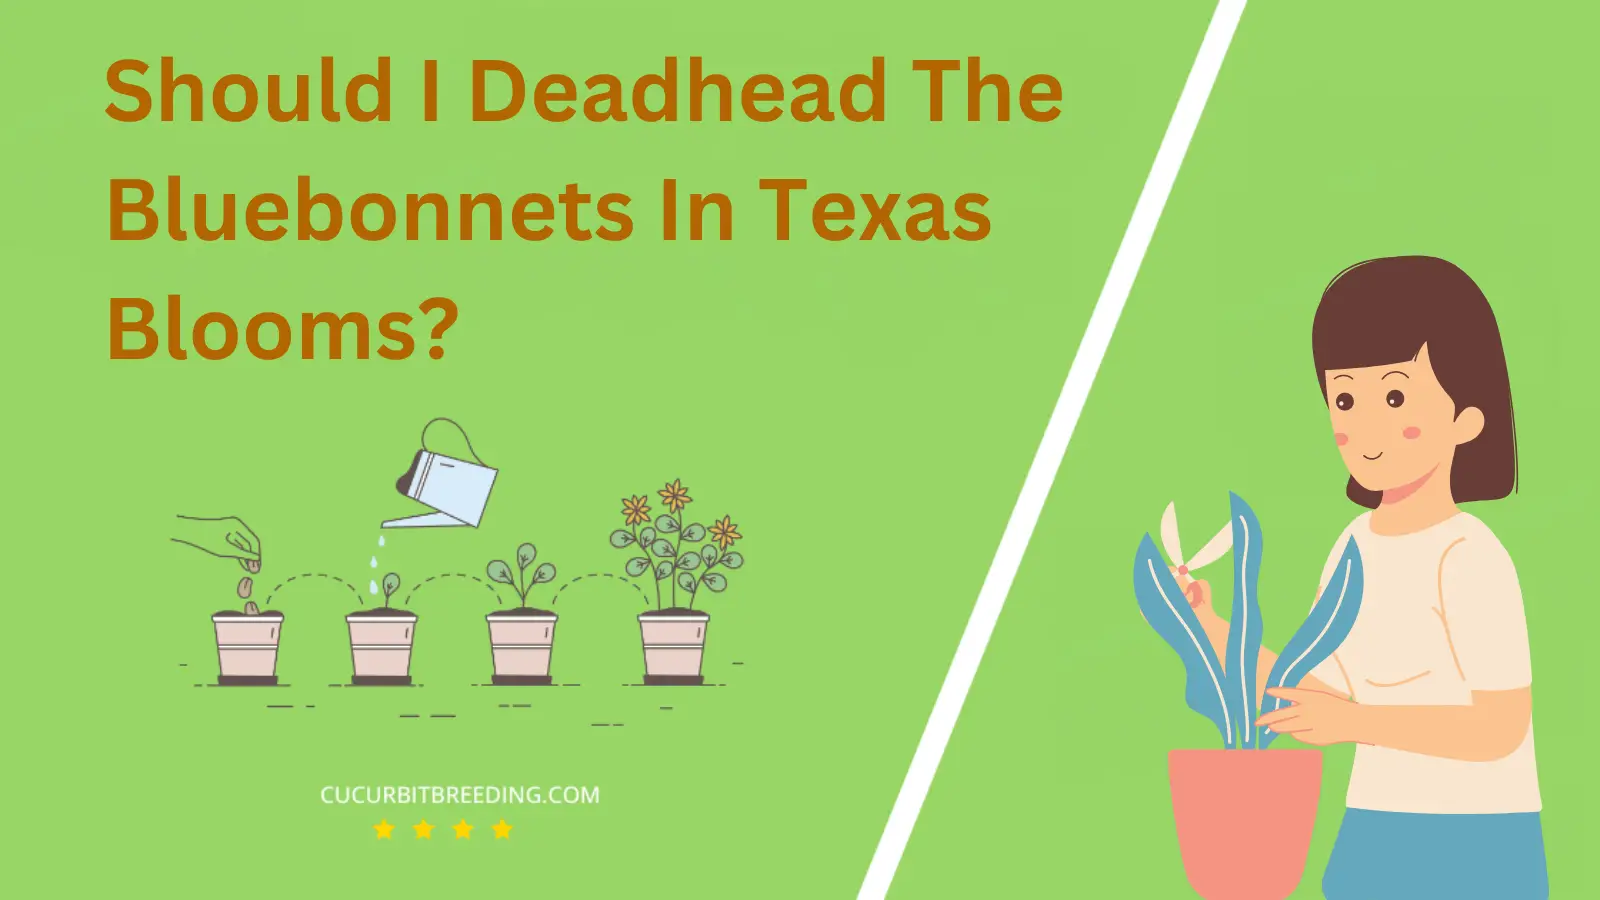 Should I Deadhead The Bluebonnets In Texas Blooms?